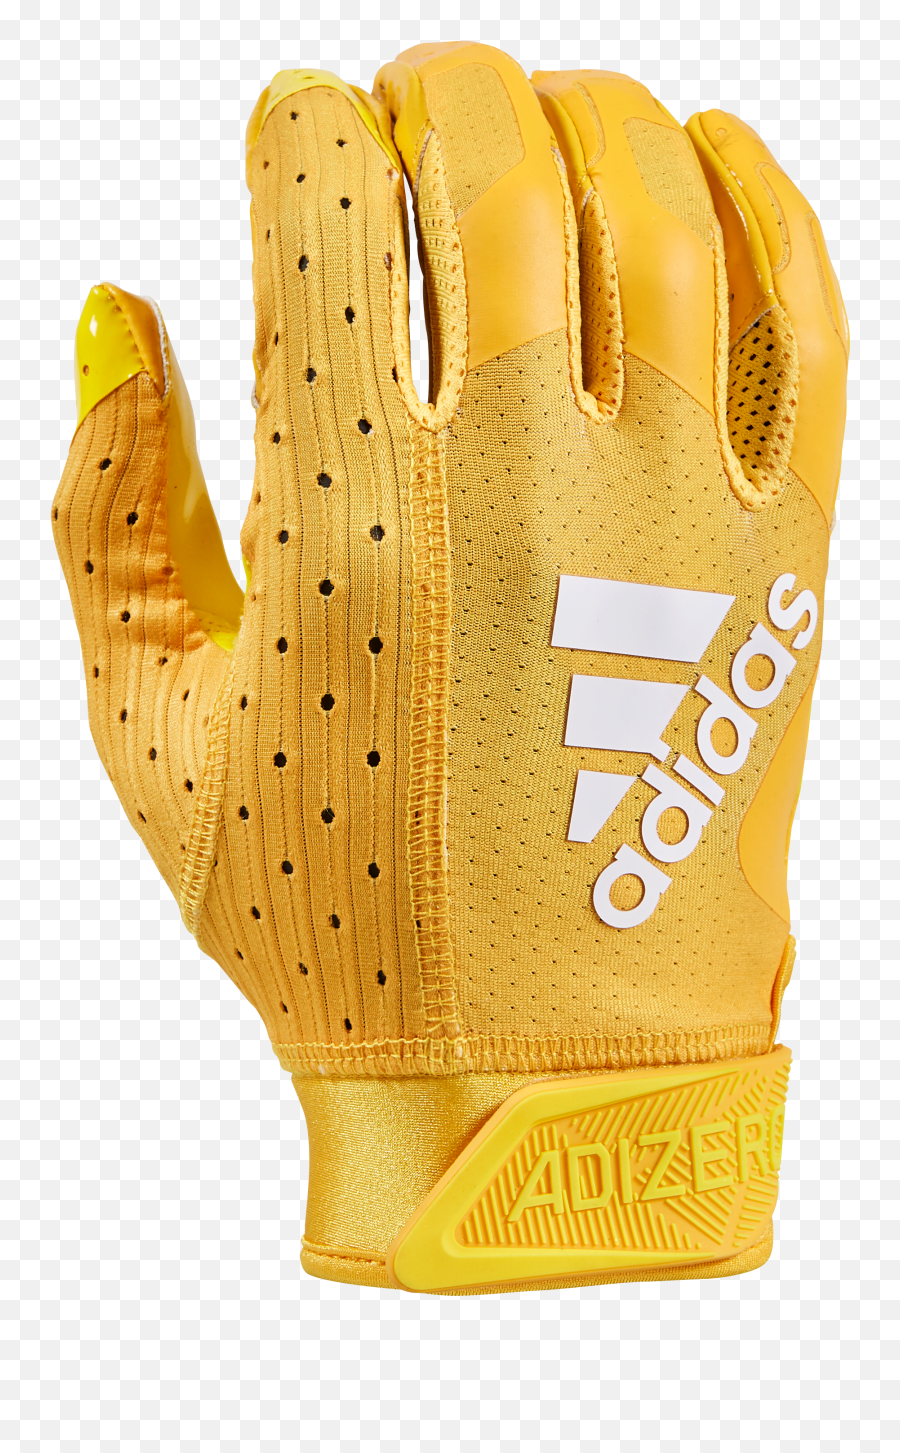 Adidas Receiver Gloves Online Shopping - Adizero Yellow Gloves Emoji,Adidas Emoji Receiver Gloves